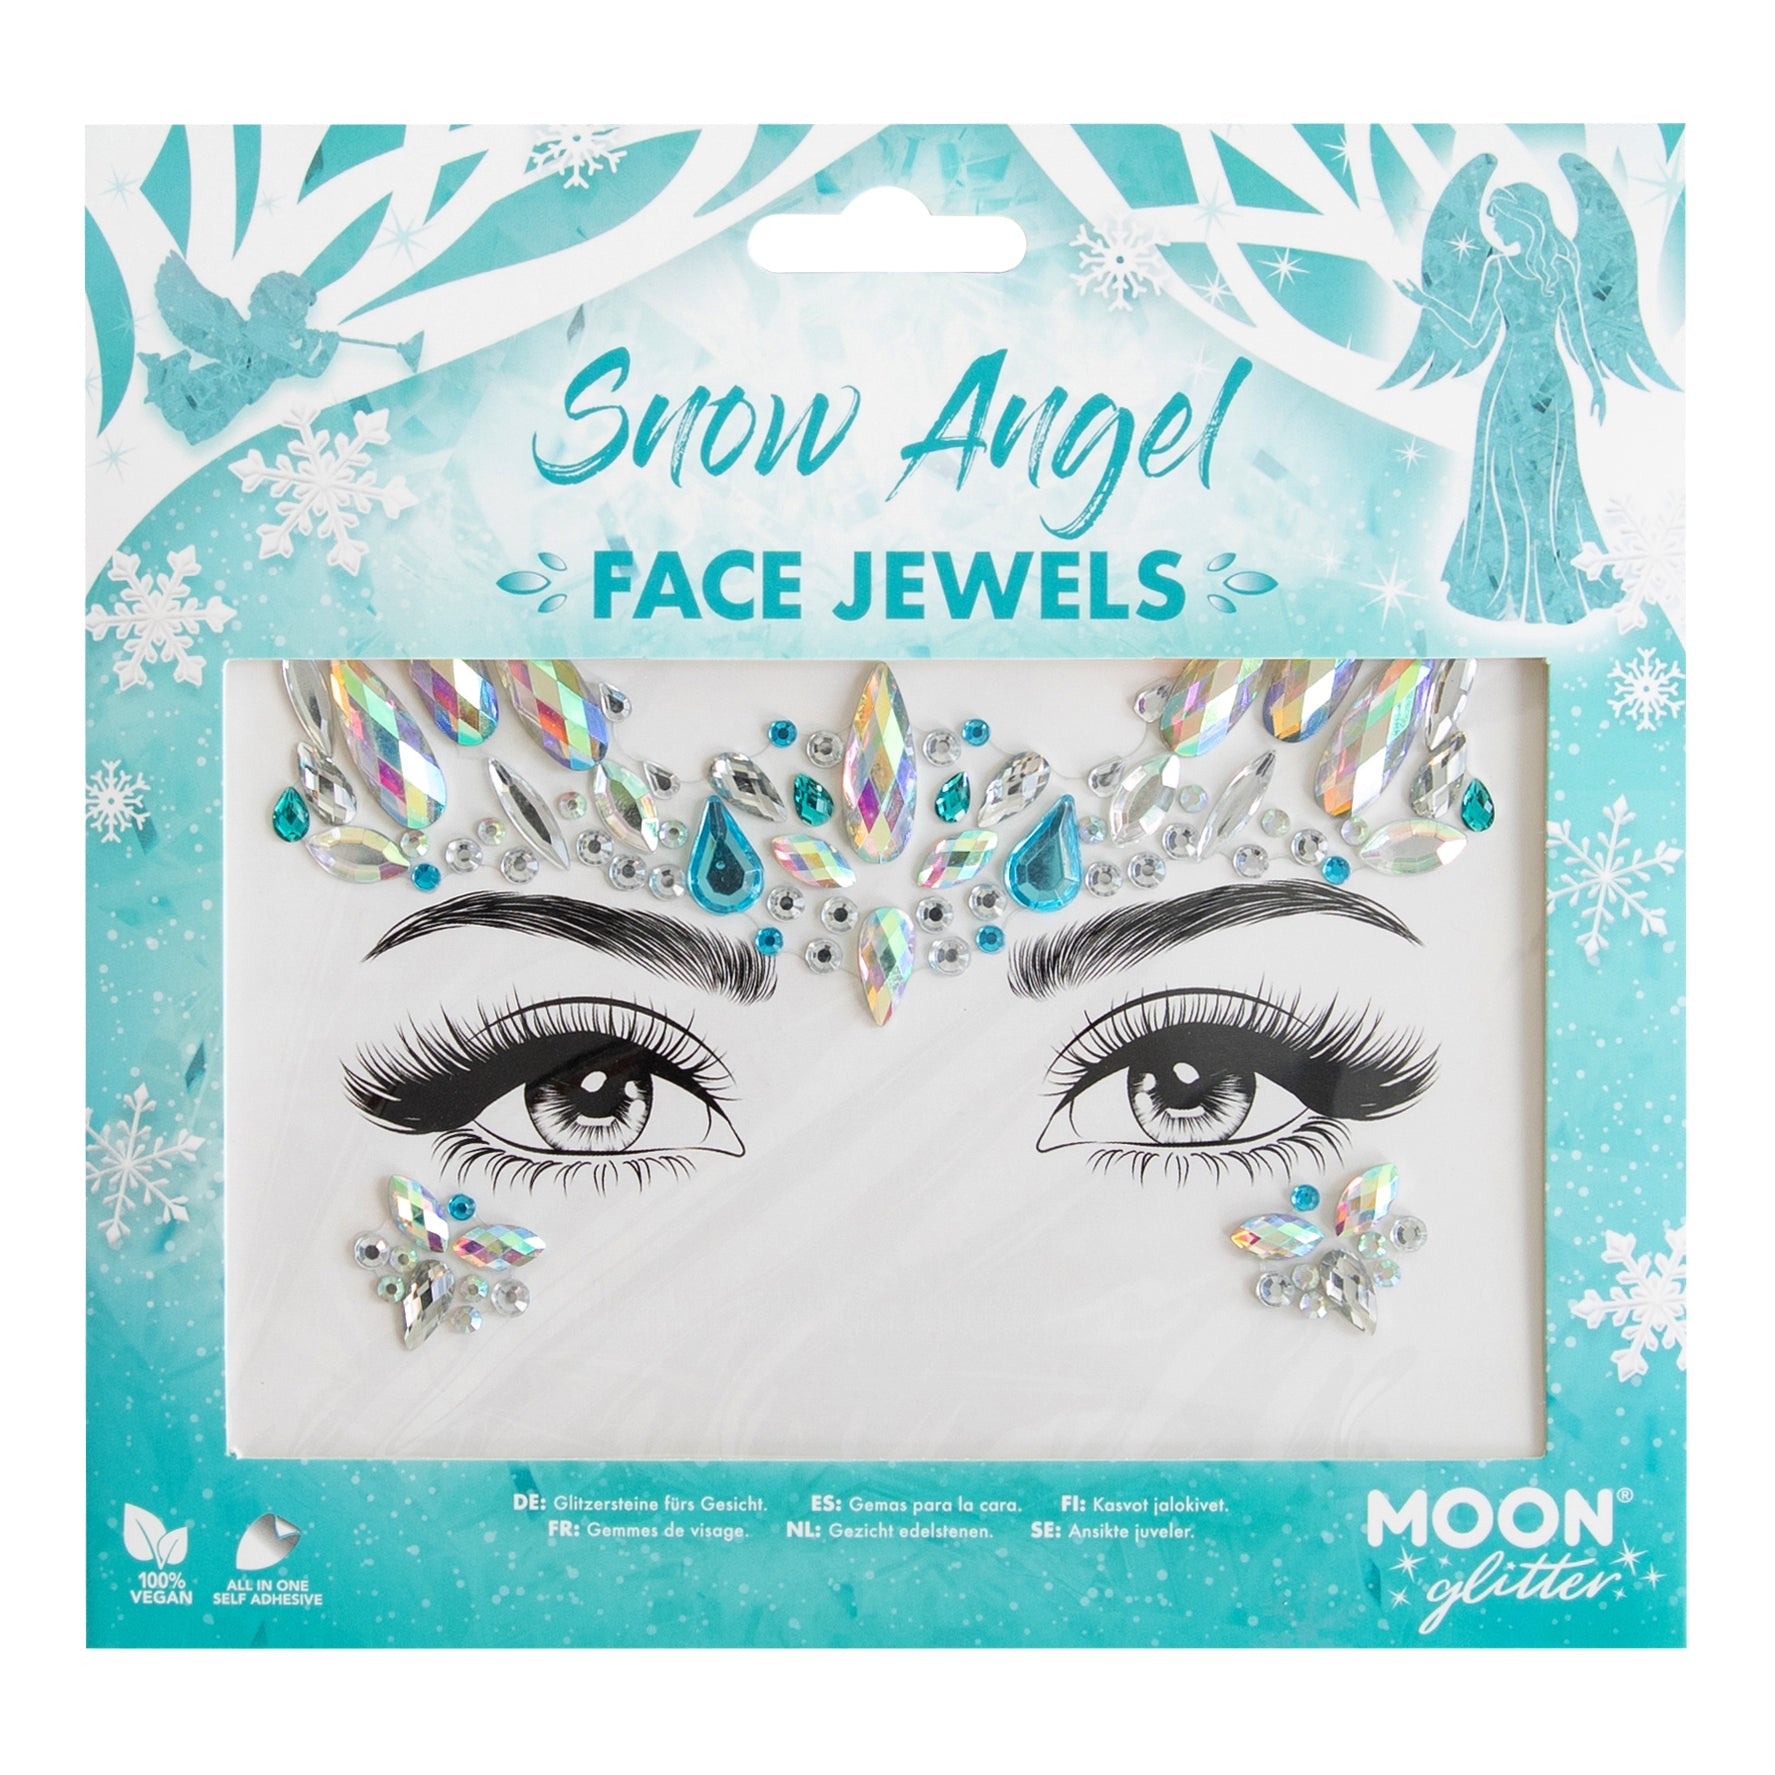 Snow Angel - Glitter Adhesive Face Gems, Jewels and Rhinestones